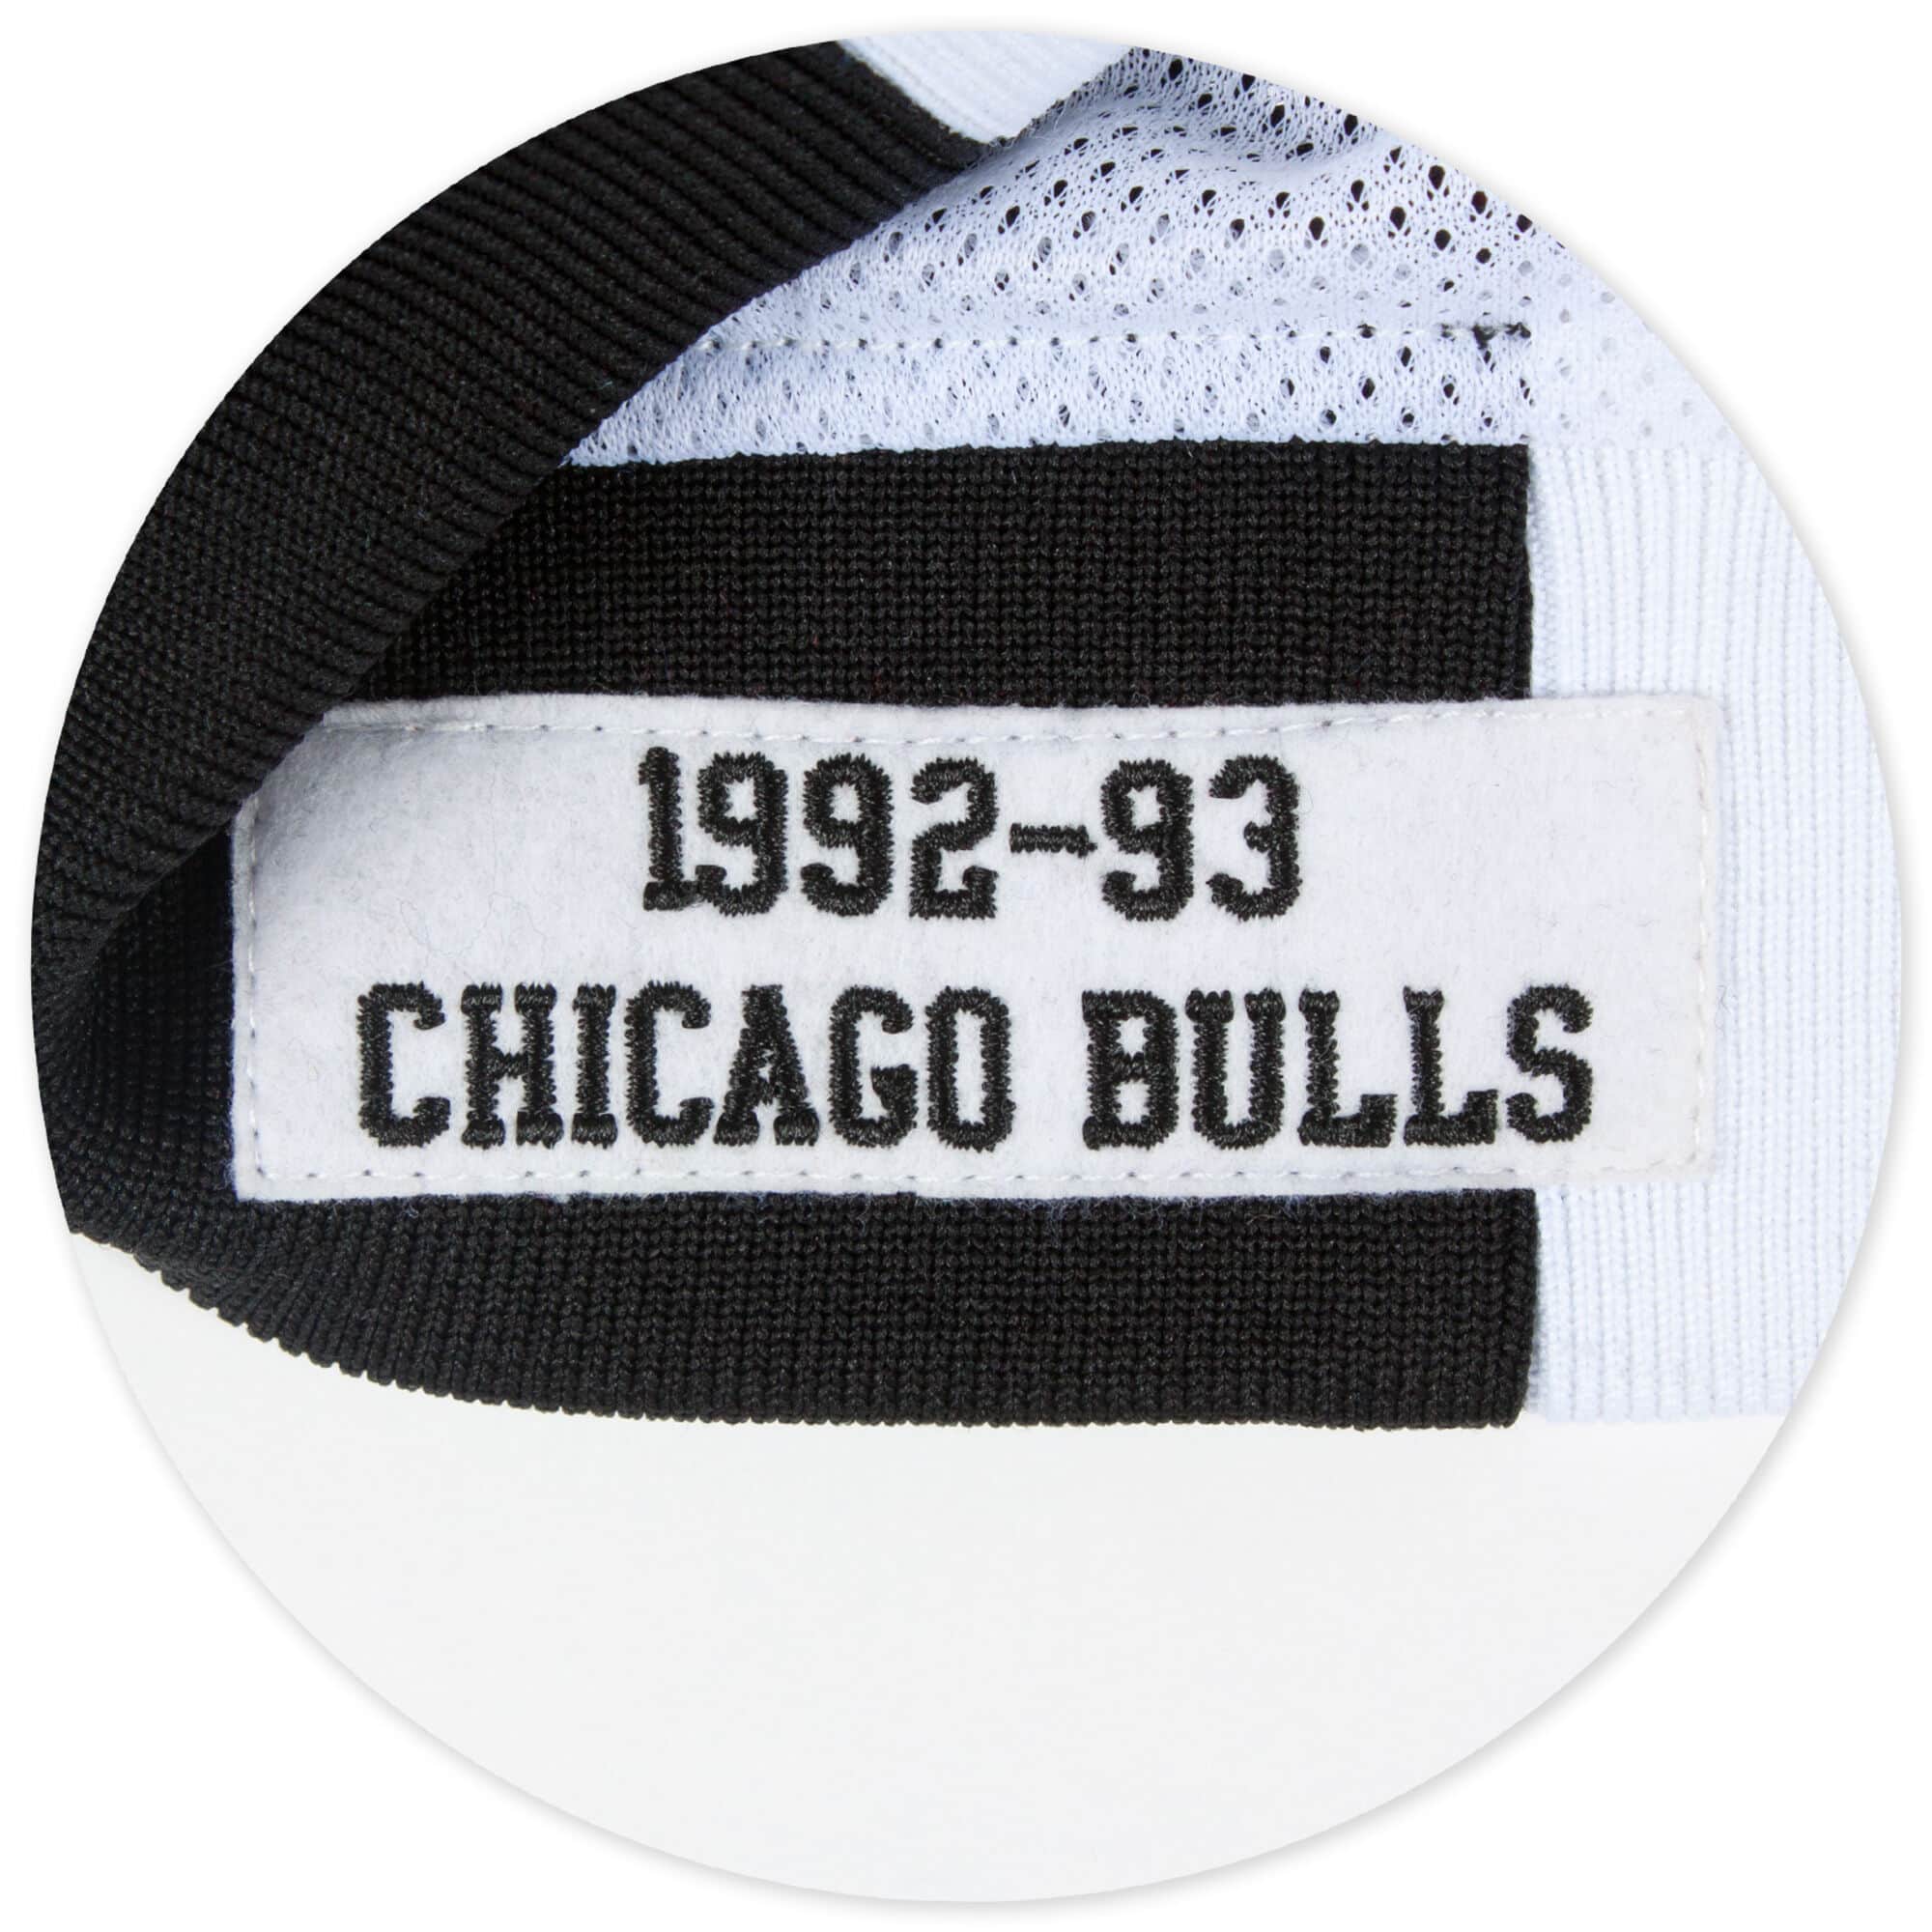 NBA Authentic Warm Up Jacket Chicago Bulls 1996-97